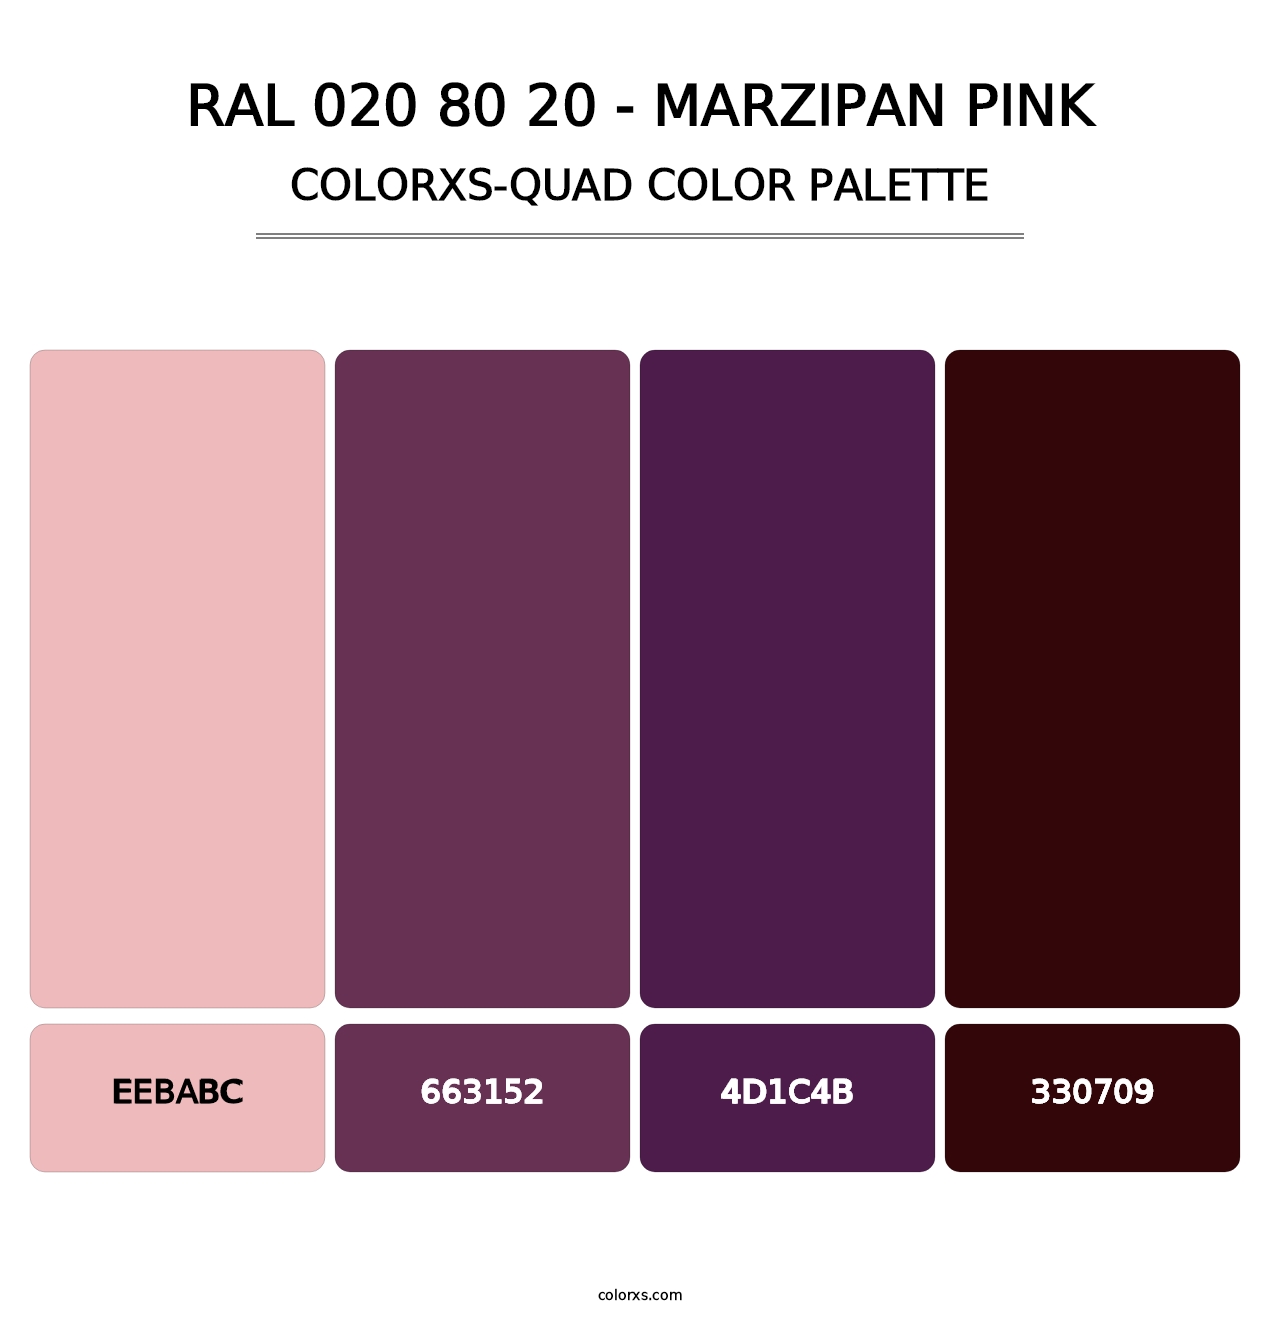 RAL 020 80 20 - Marzipan Pink - Colorxs Quad Palette